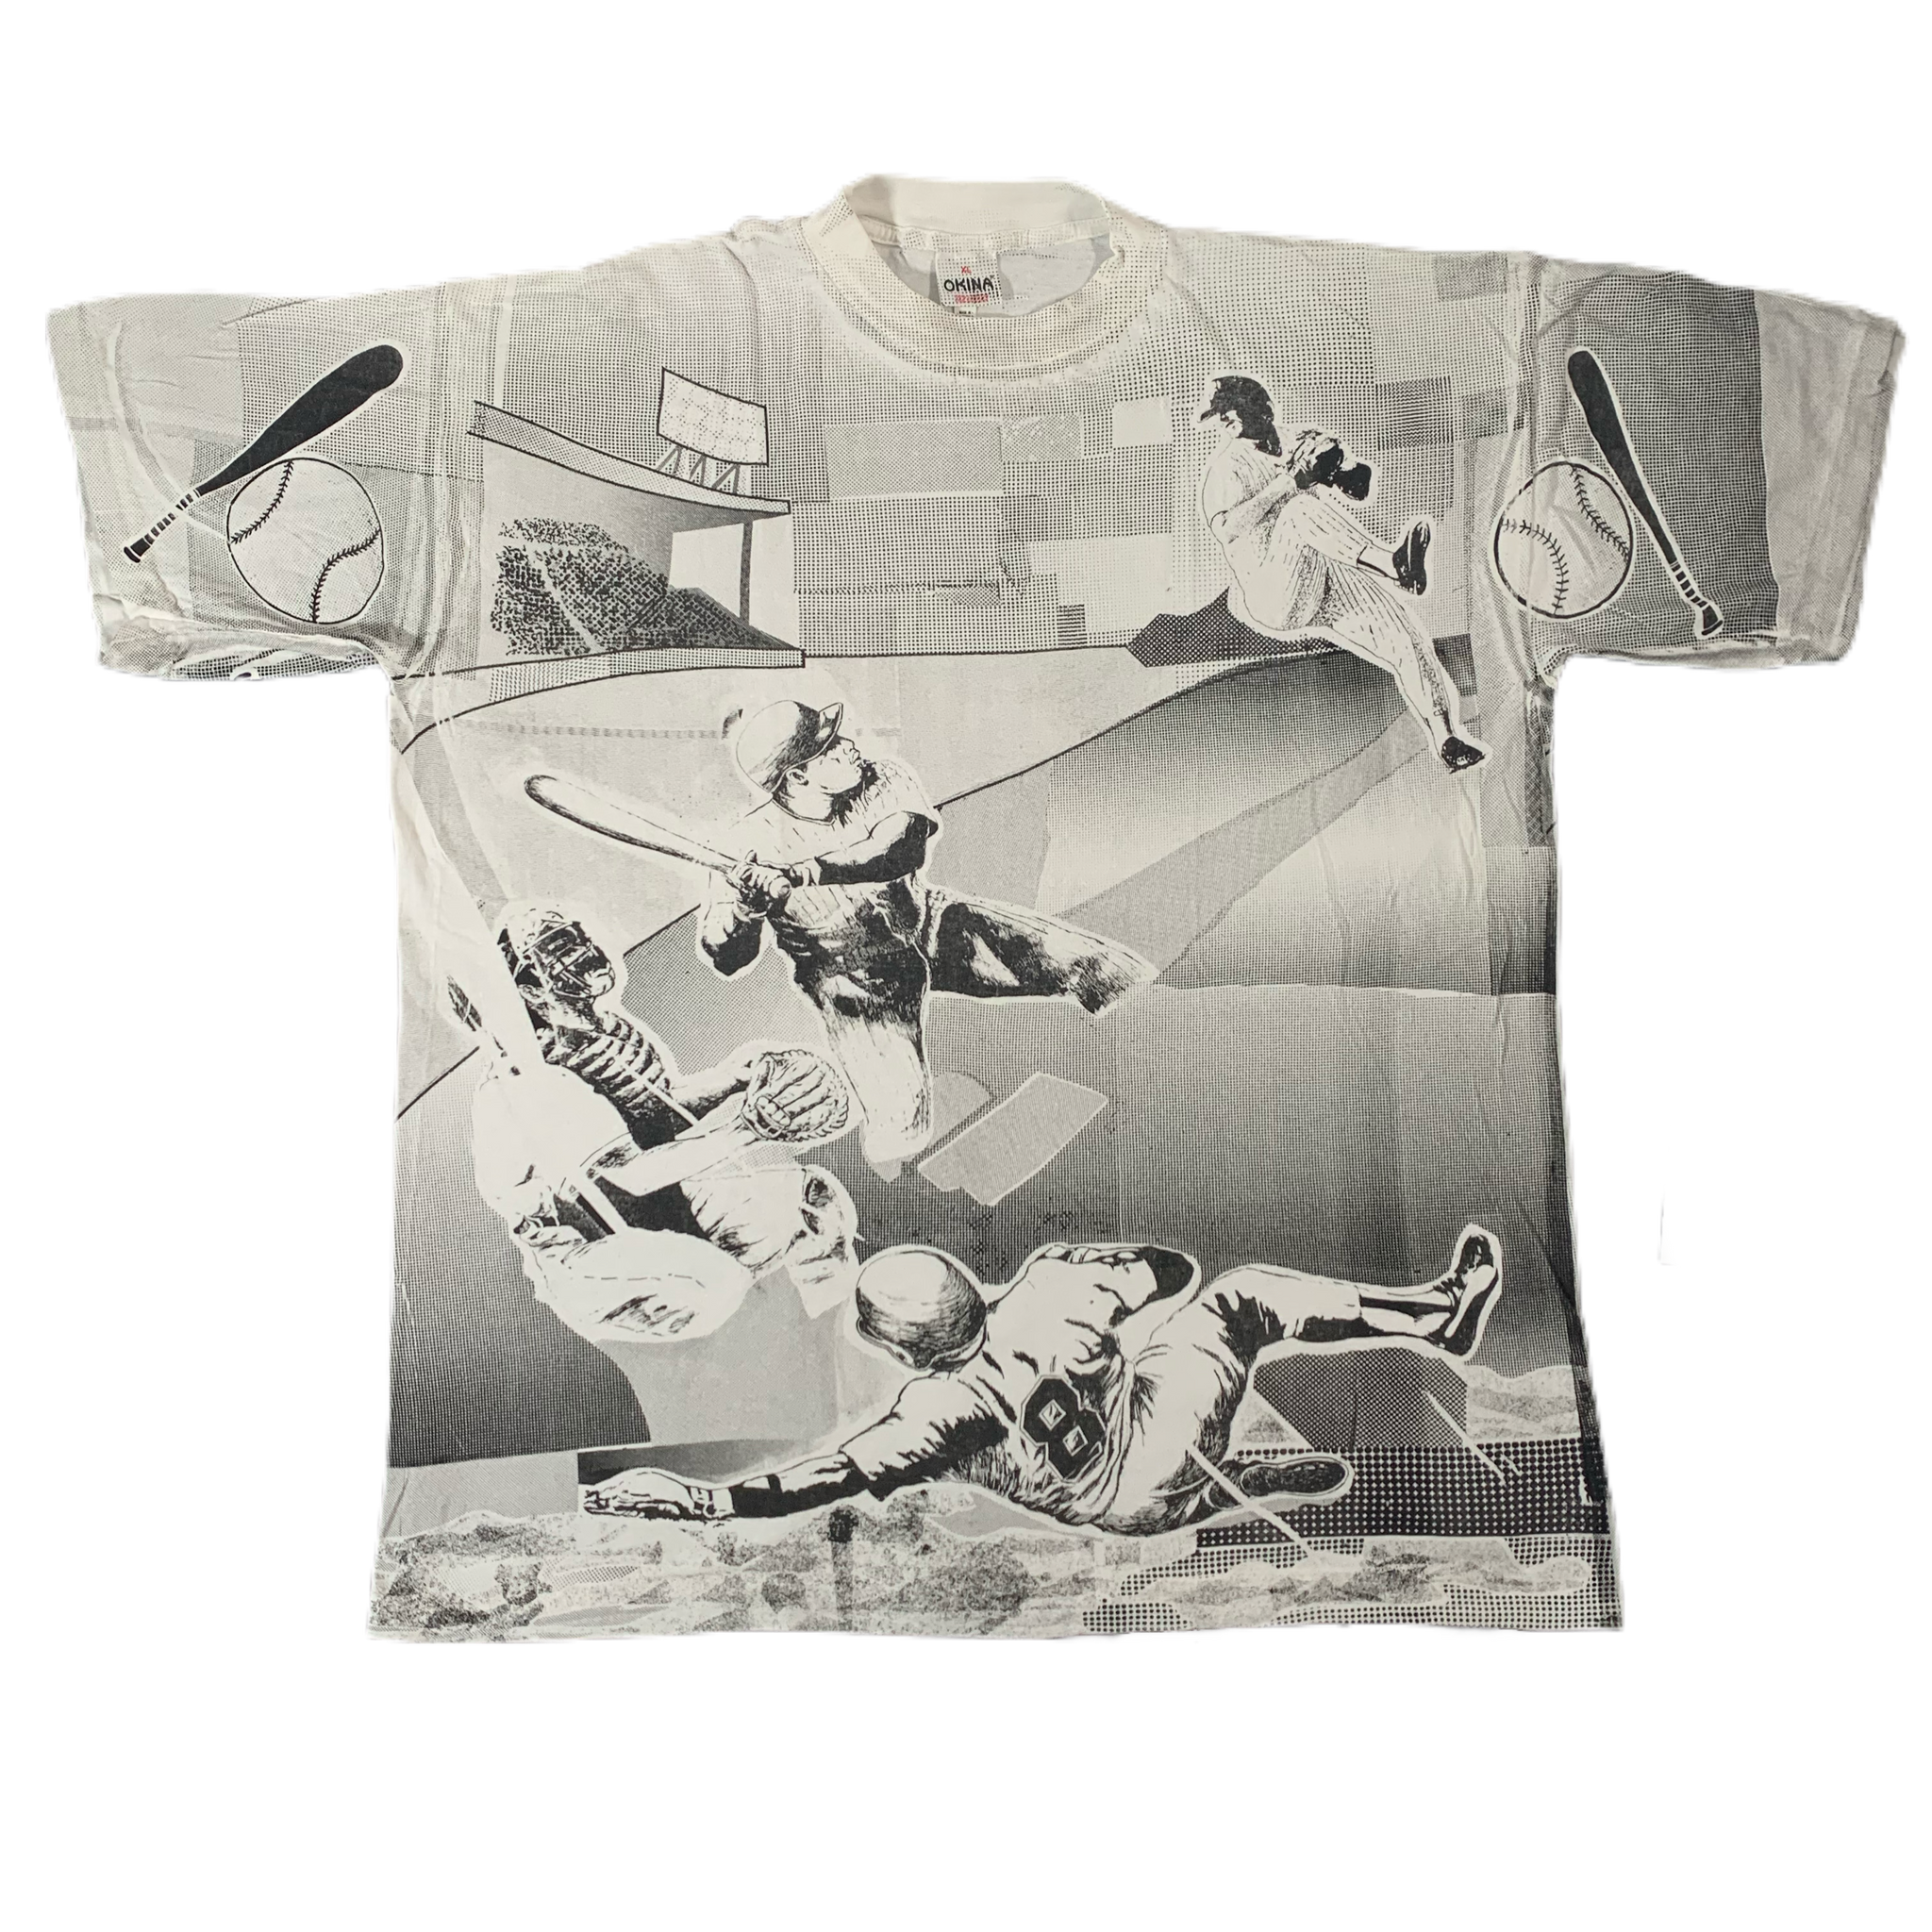 Vintage New York Yankees “Yogi Berra” All Over Print T-Shirt